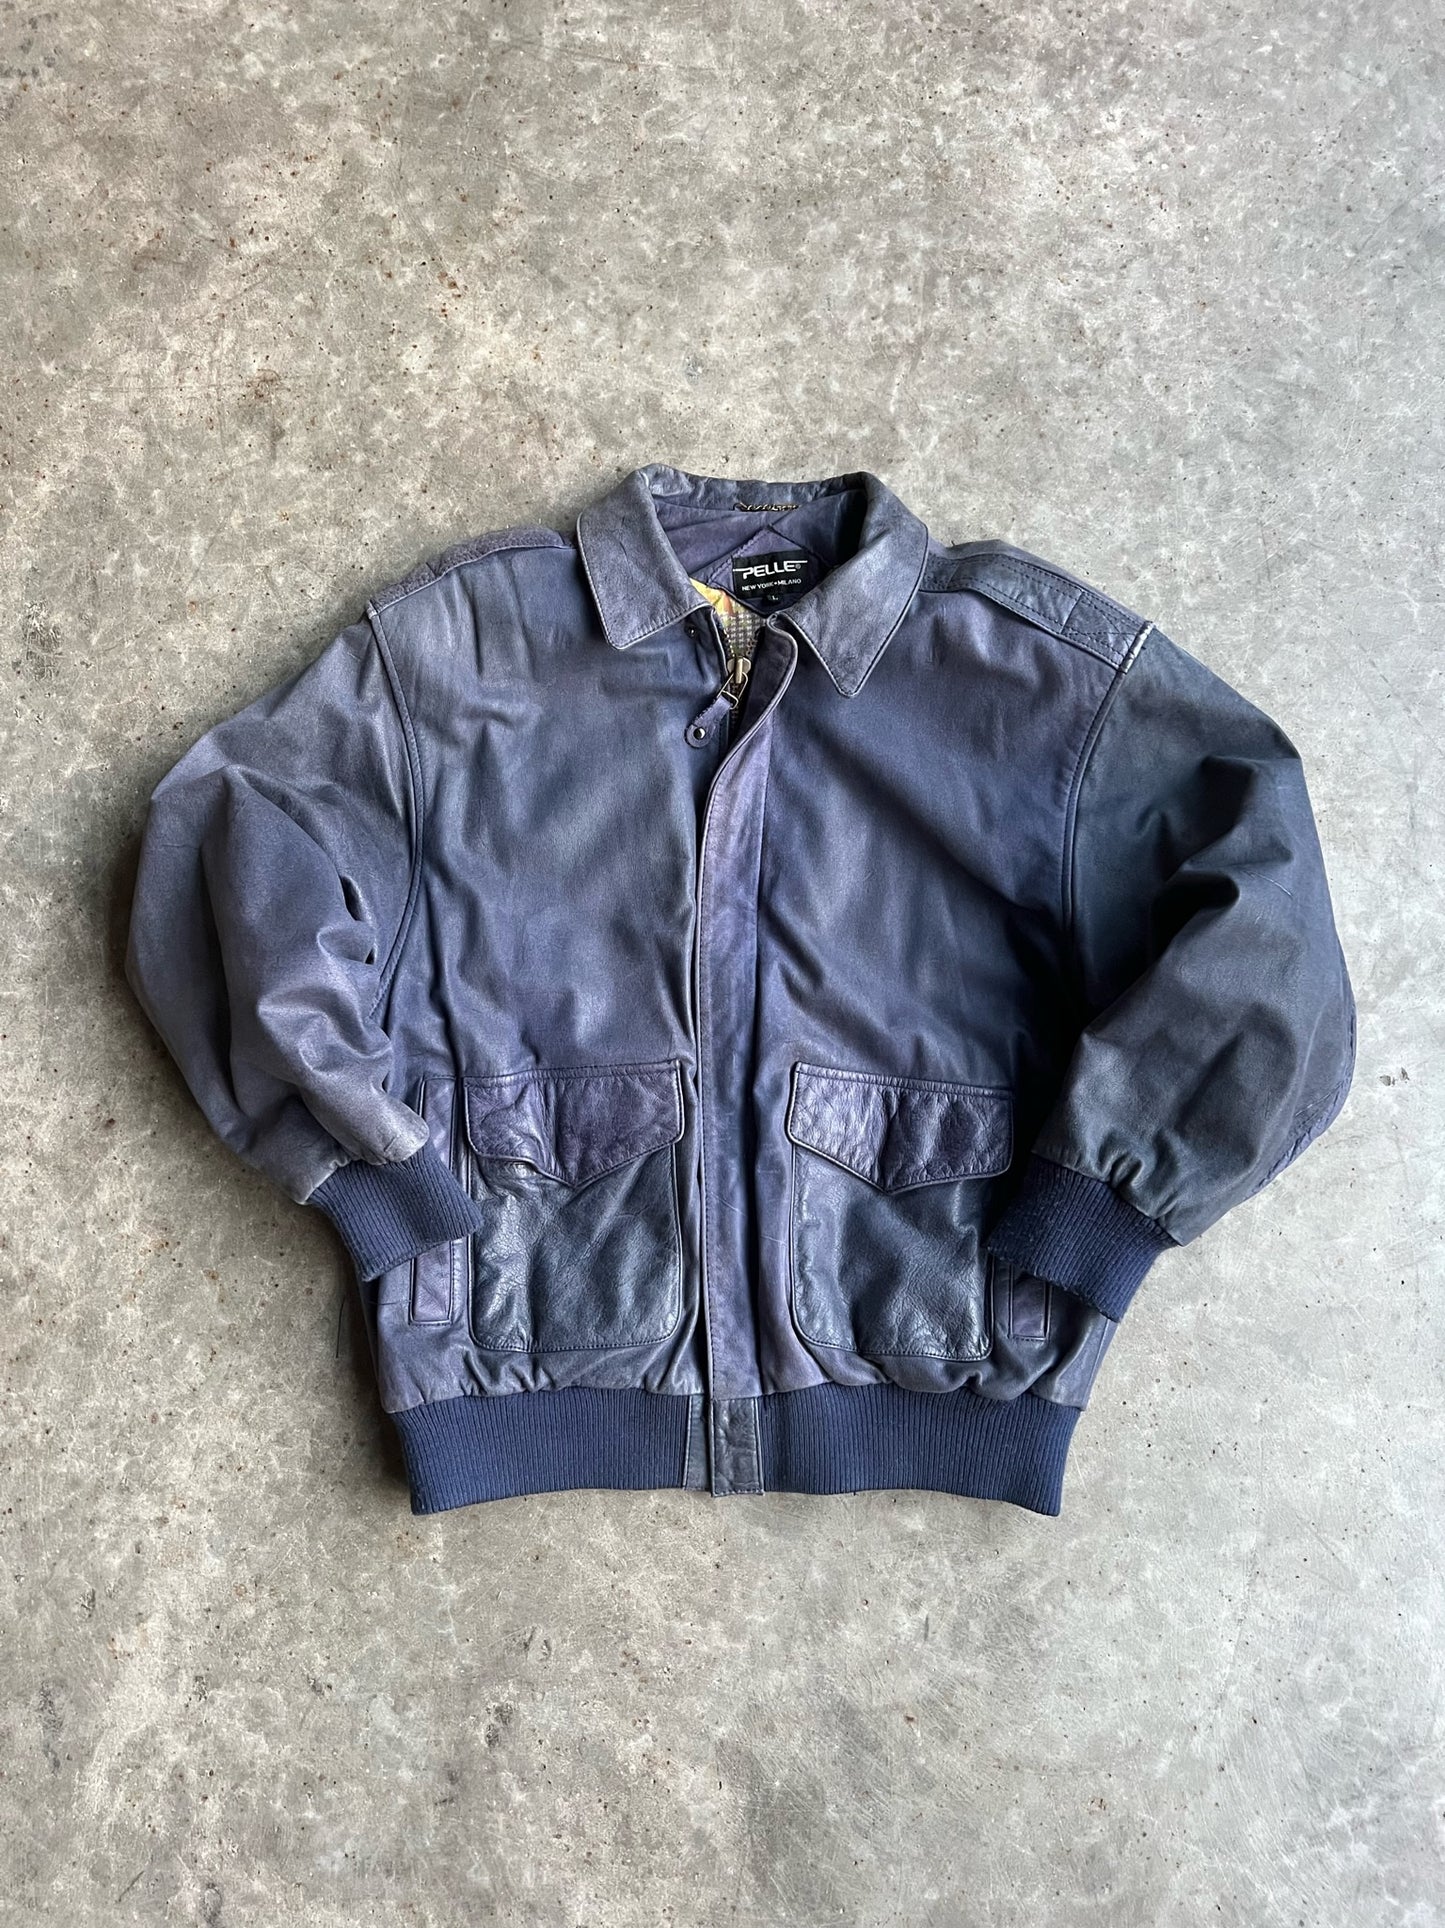 Vintage Pelle Leather Jacket - L